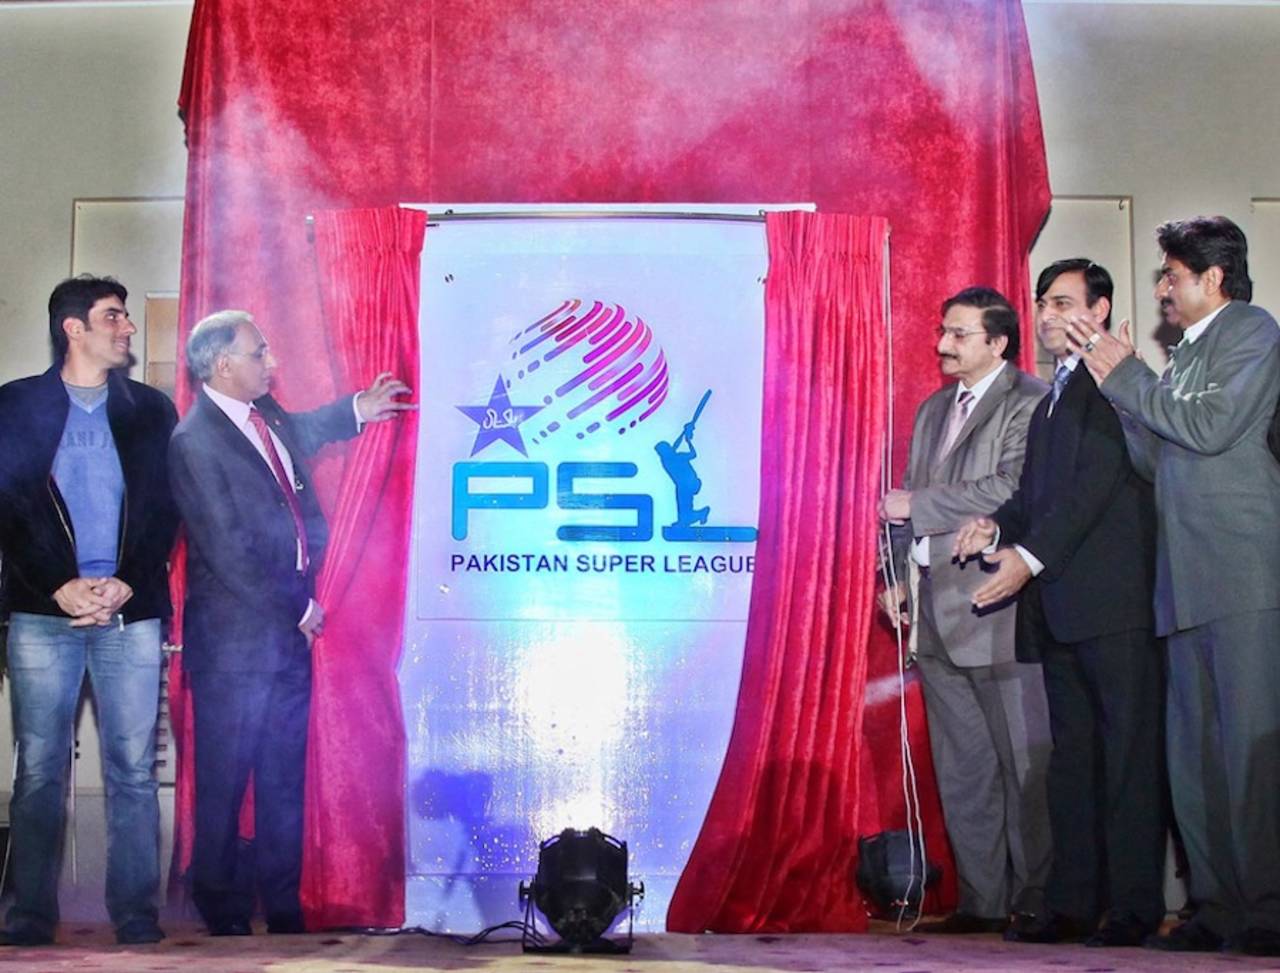 The Pakistan Super League model was unveiled in January&nbsp;&nbsp;&bull;&nbsp;&nbsp;Pakistan Cricket Board